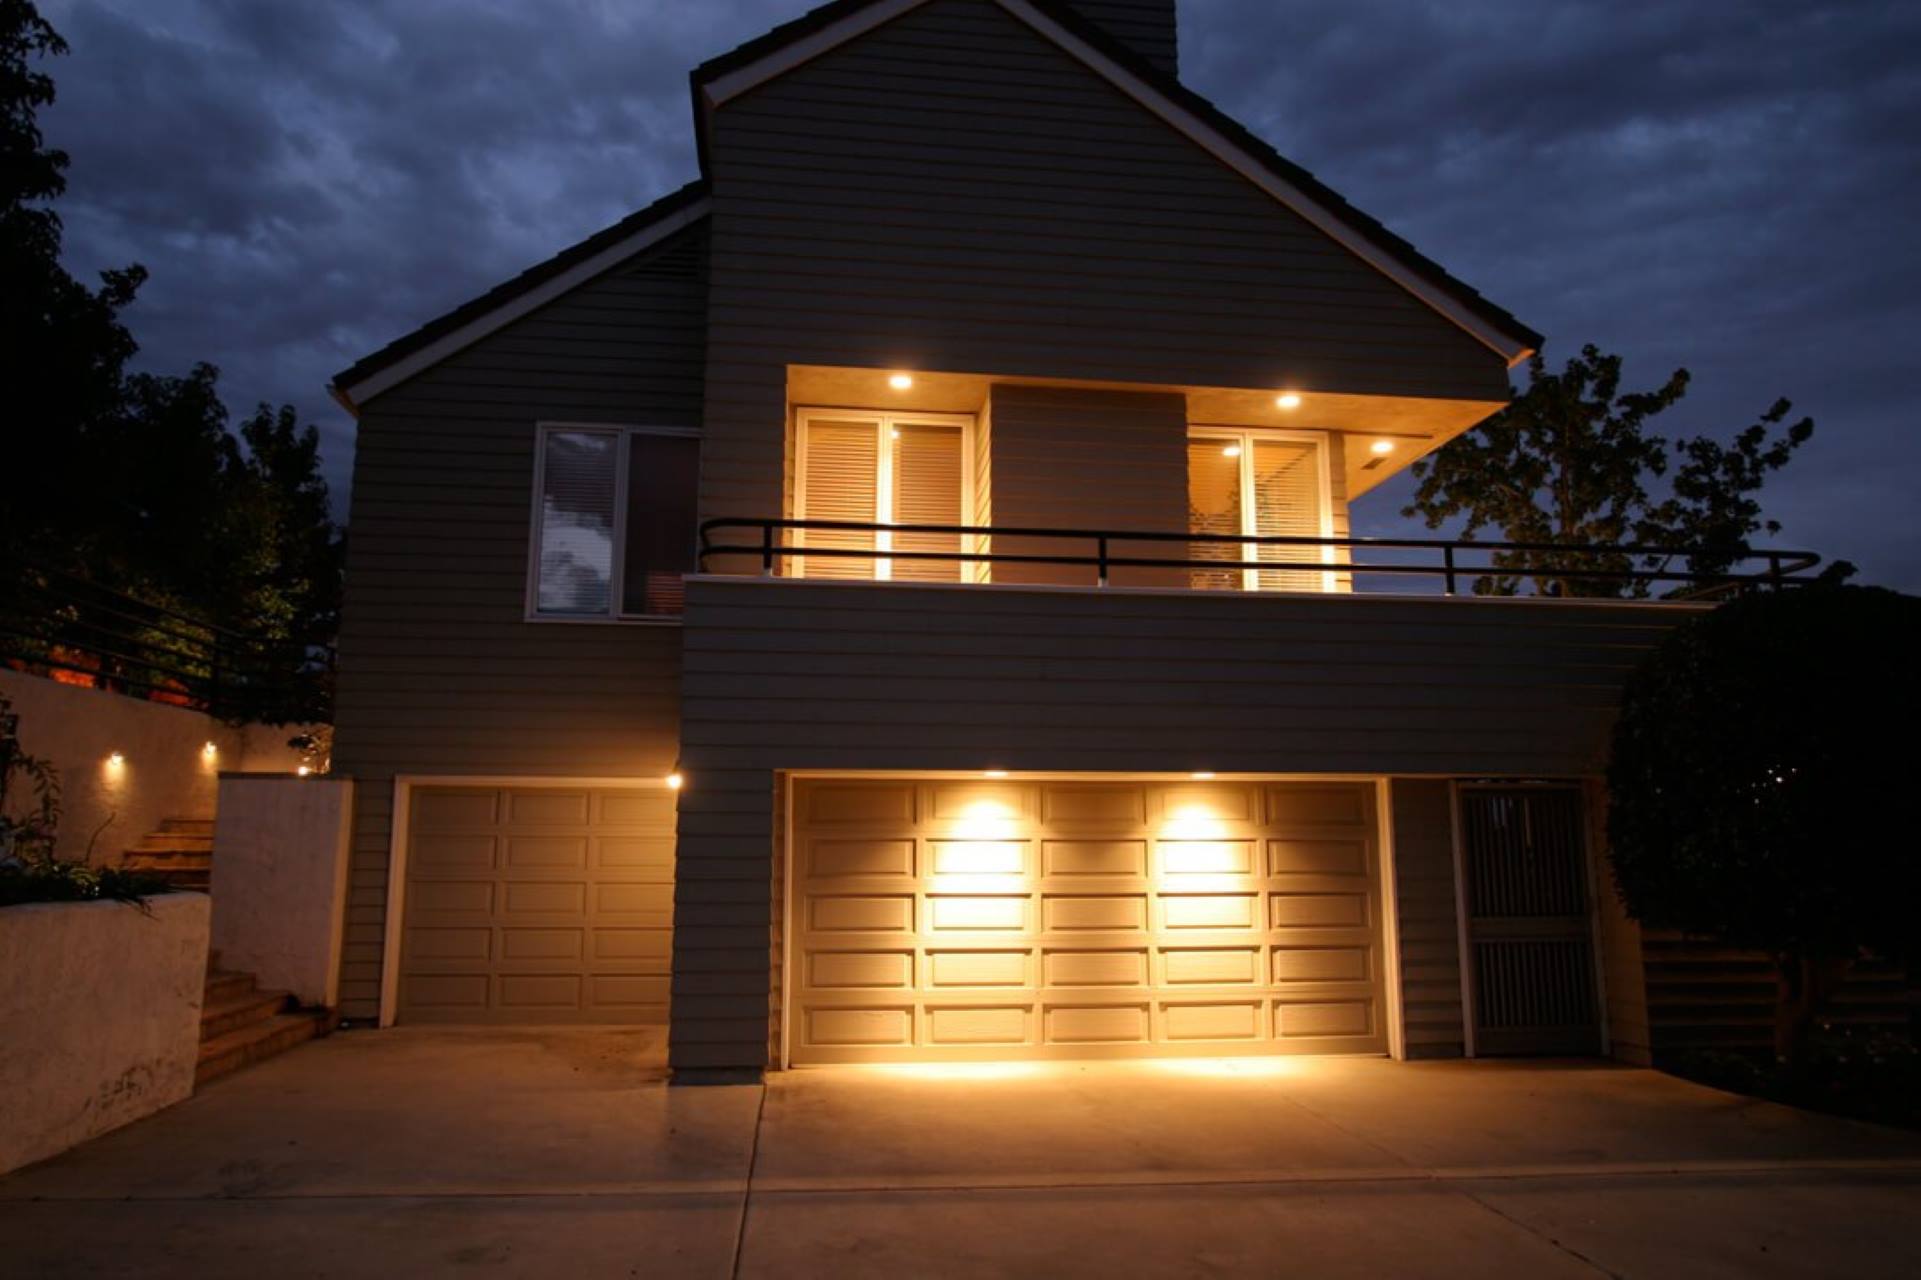 Garage lighting ideas to make your garage look elegant